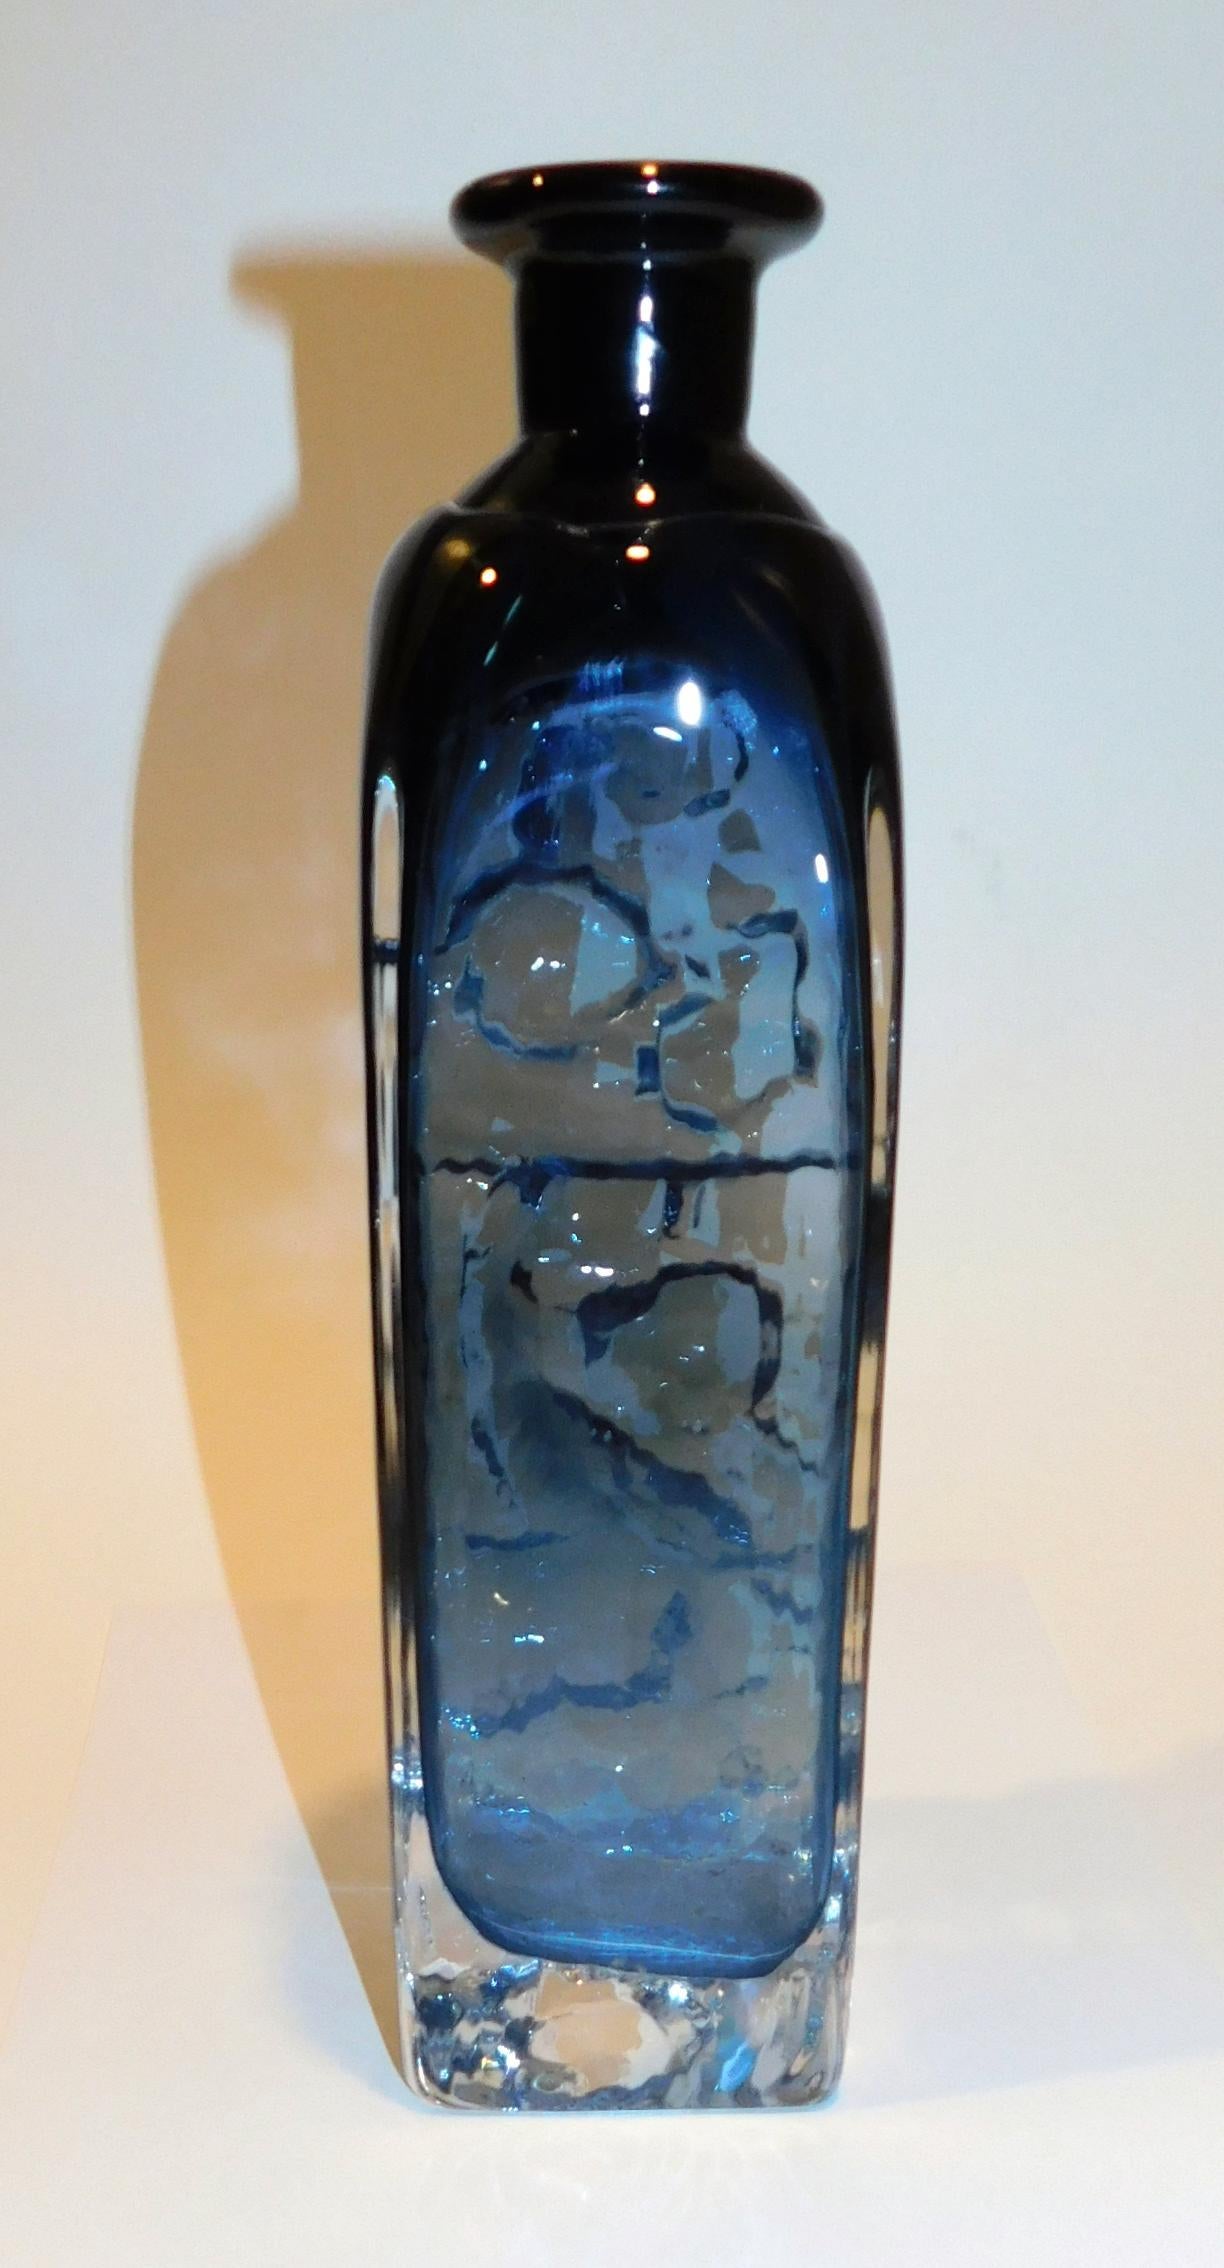 20th Century Lars Hellsten Orrefors Glass Vase in Smoky Blue-Grey, 1979 For Sale